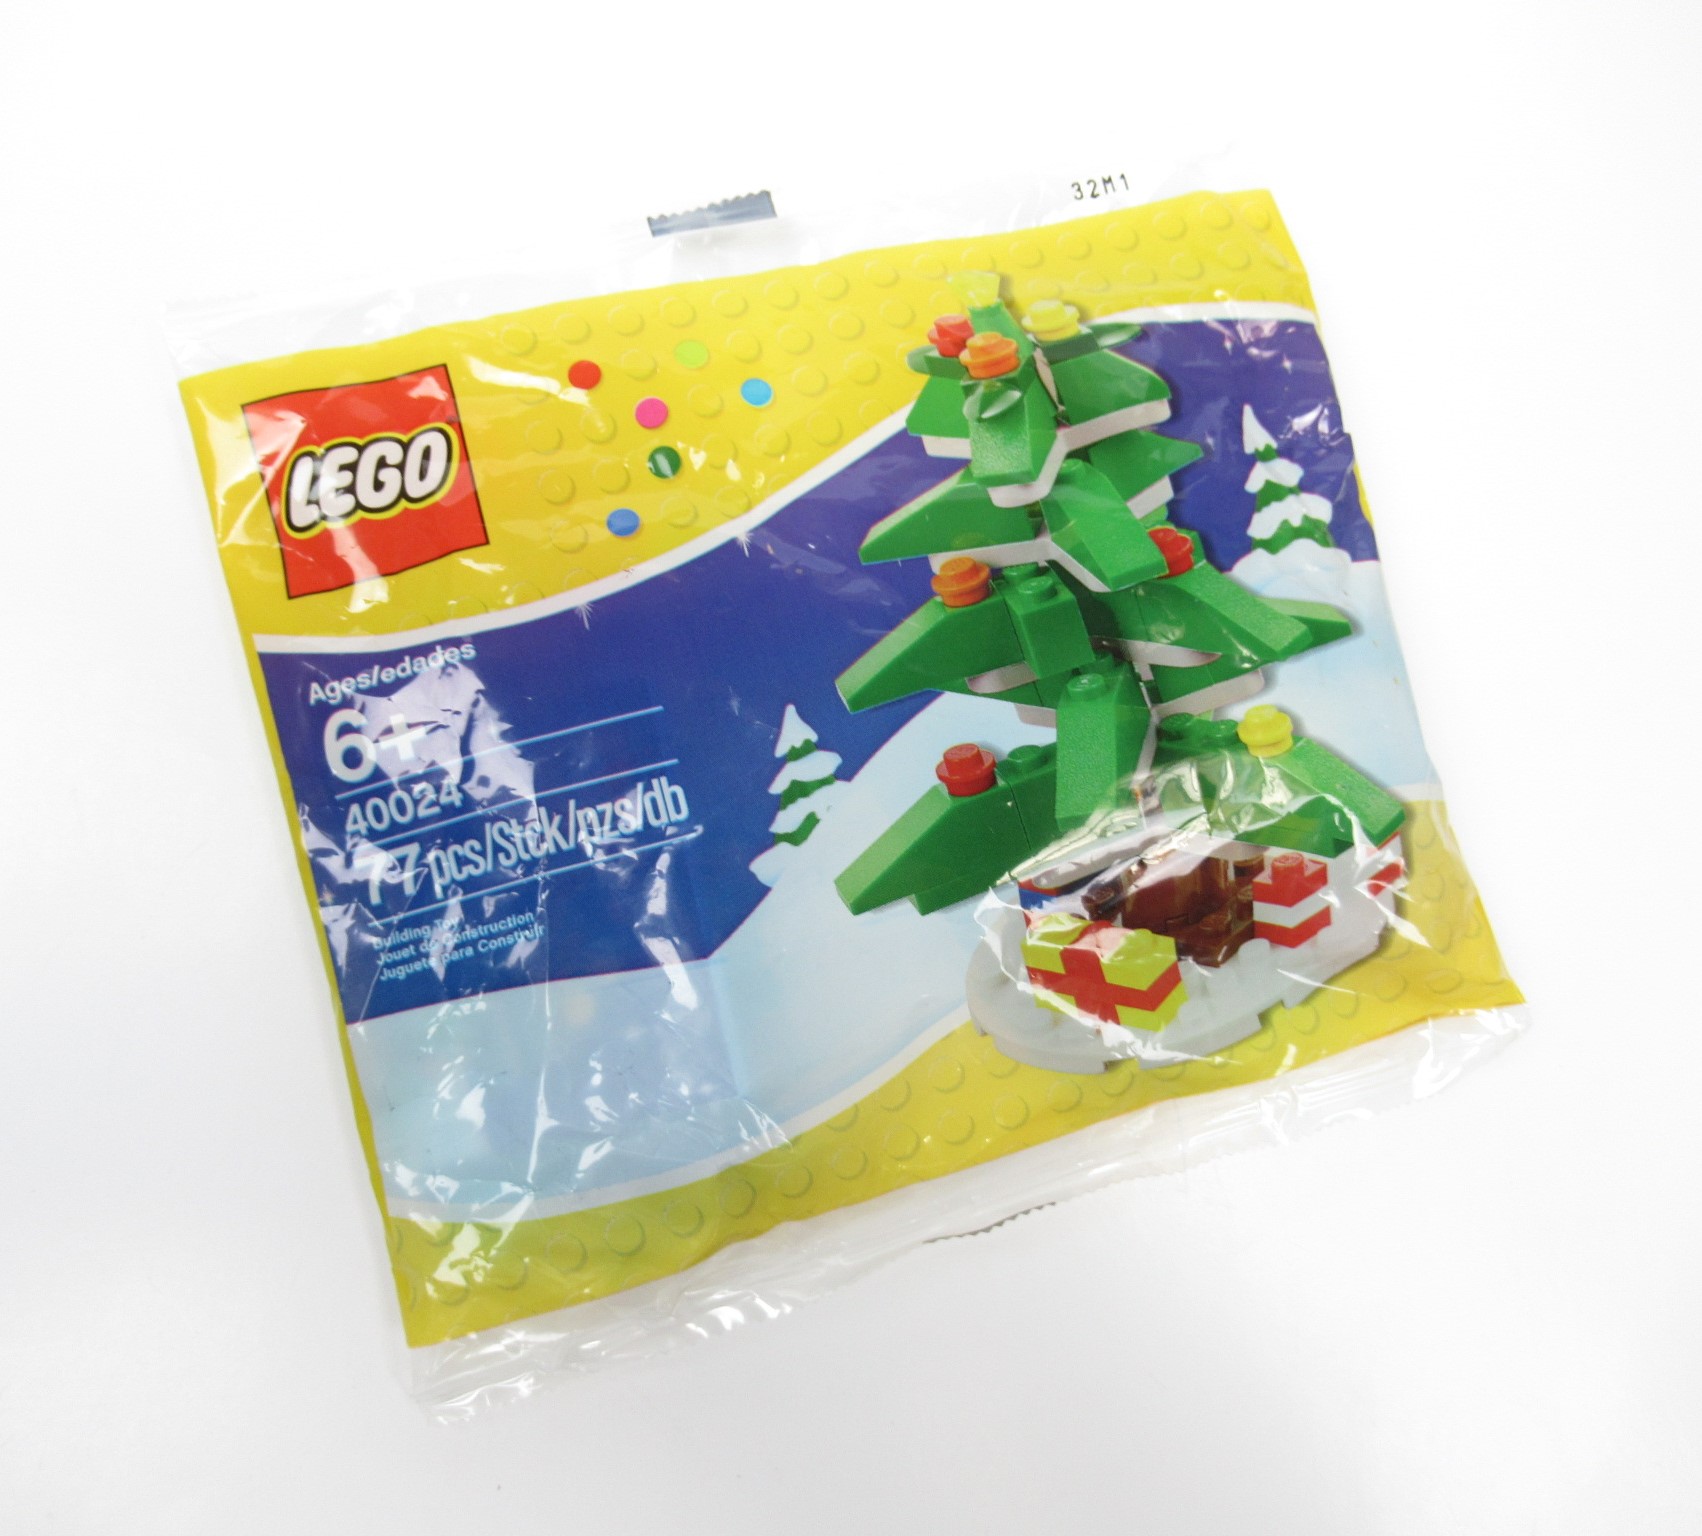 LEGO Creator - 40024 Weihnachtsbaum Polybag की तस्वीर